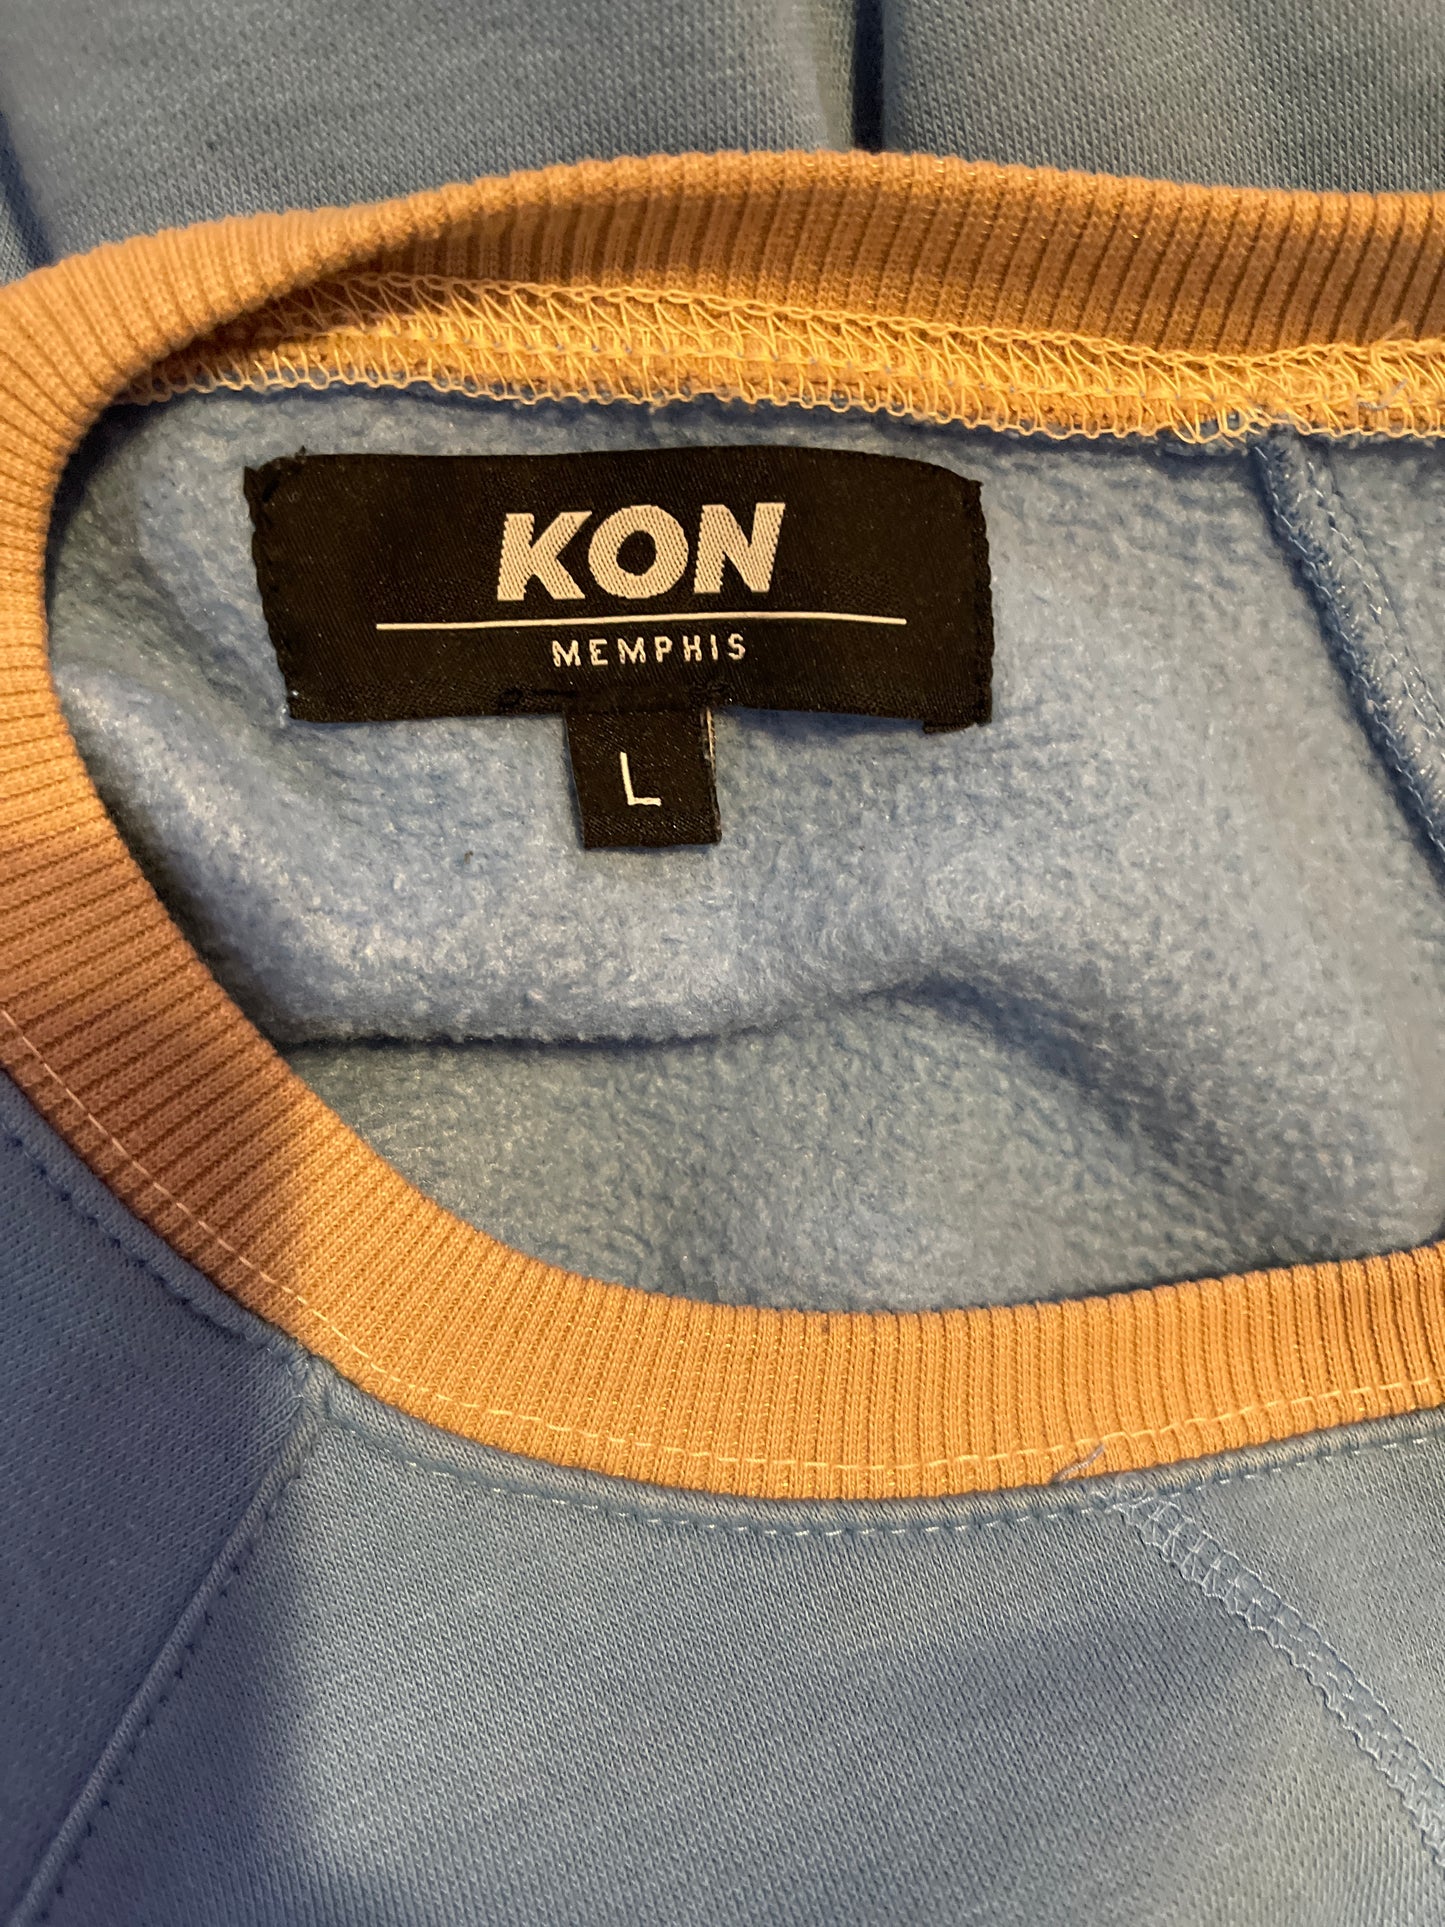 KON light blue heavy seat shirt pullover